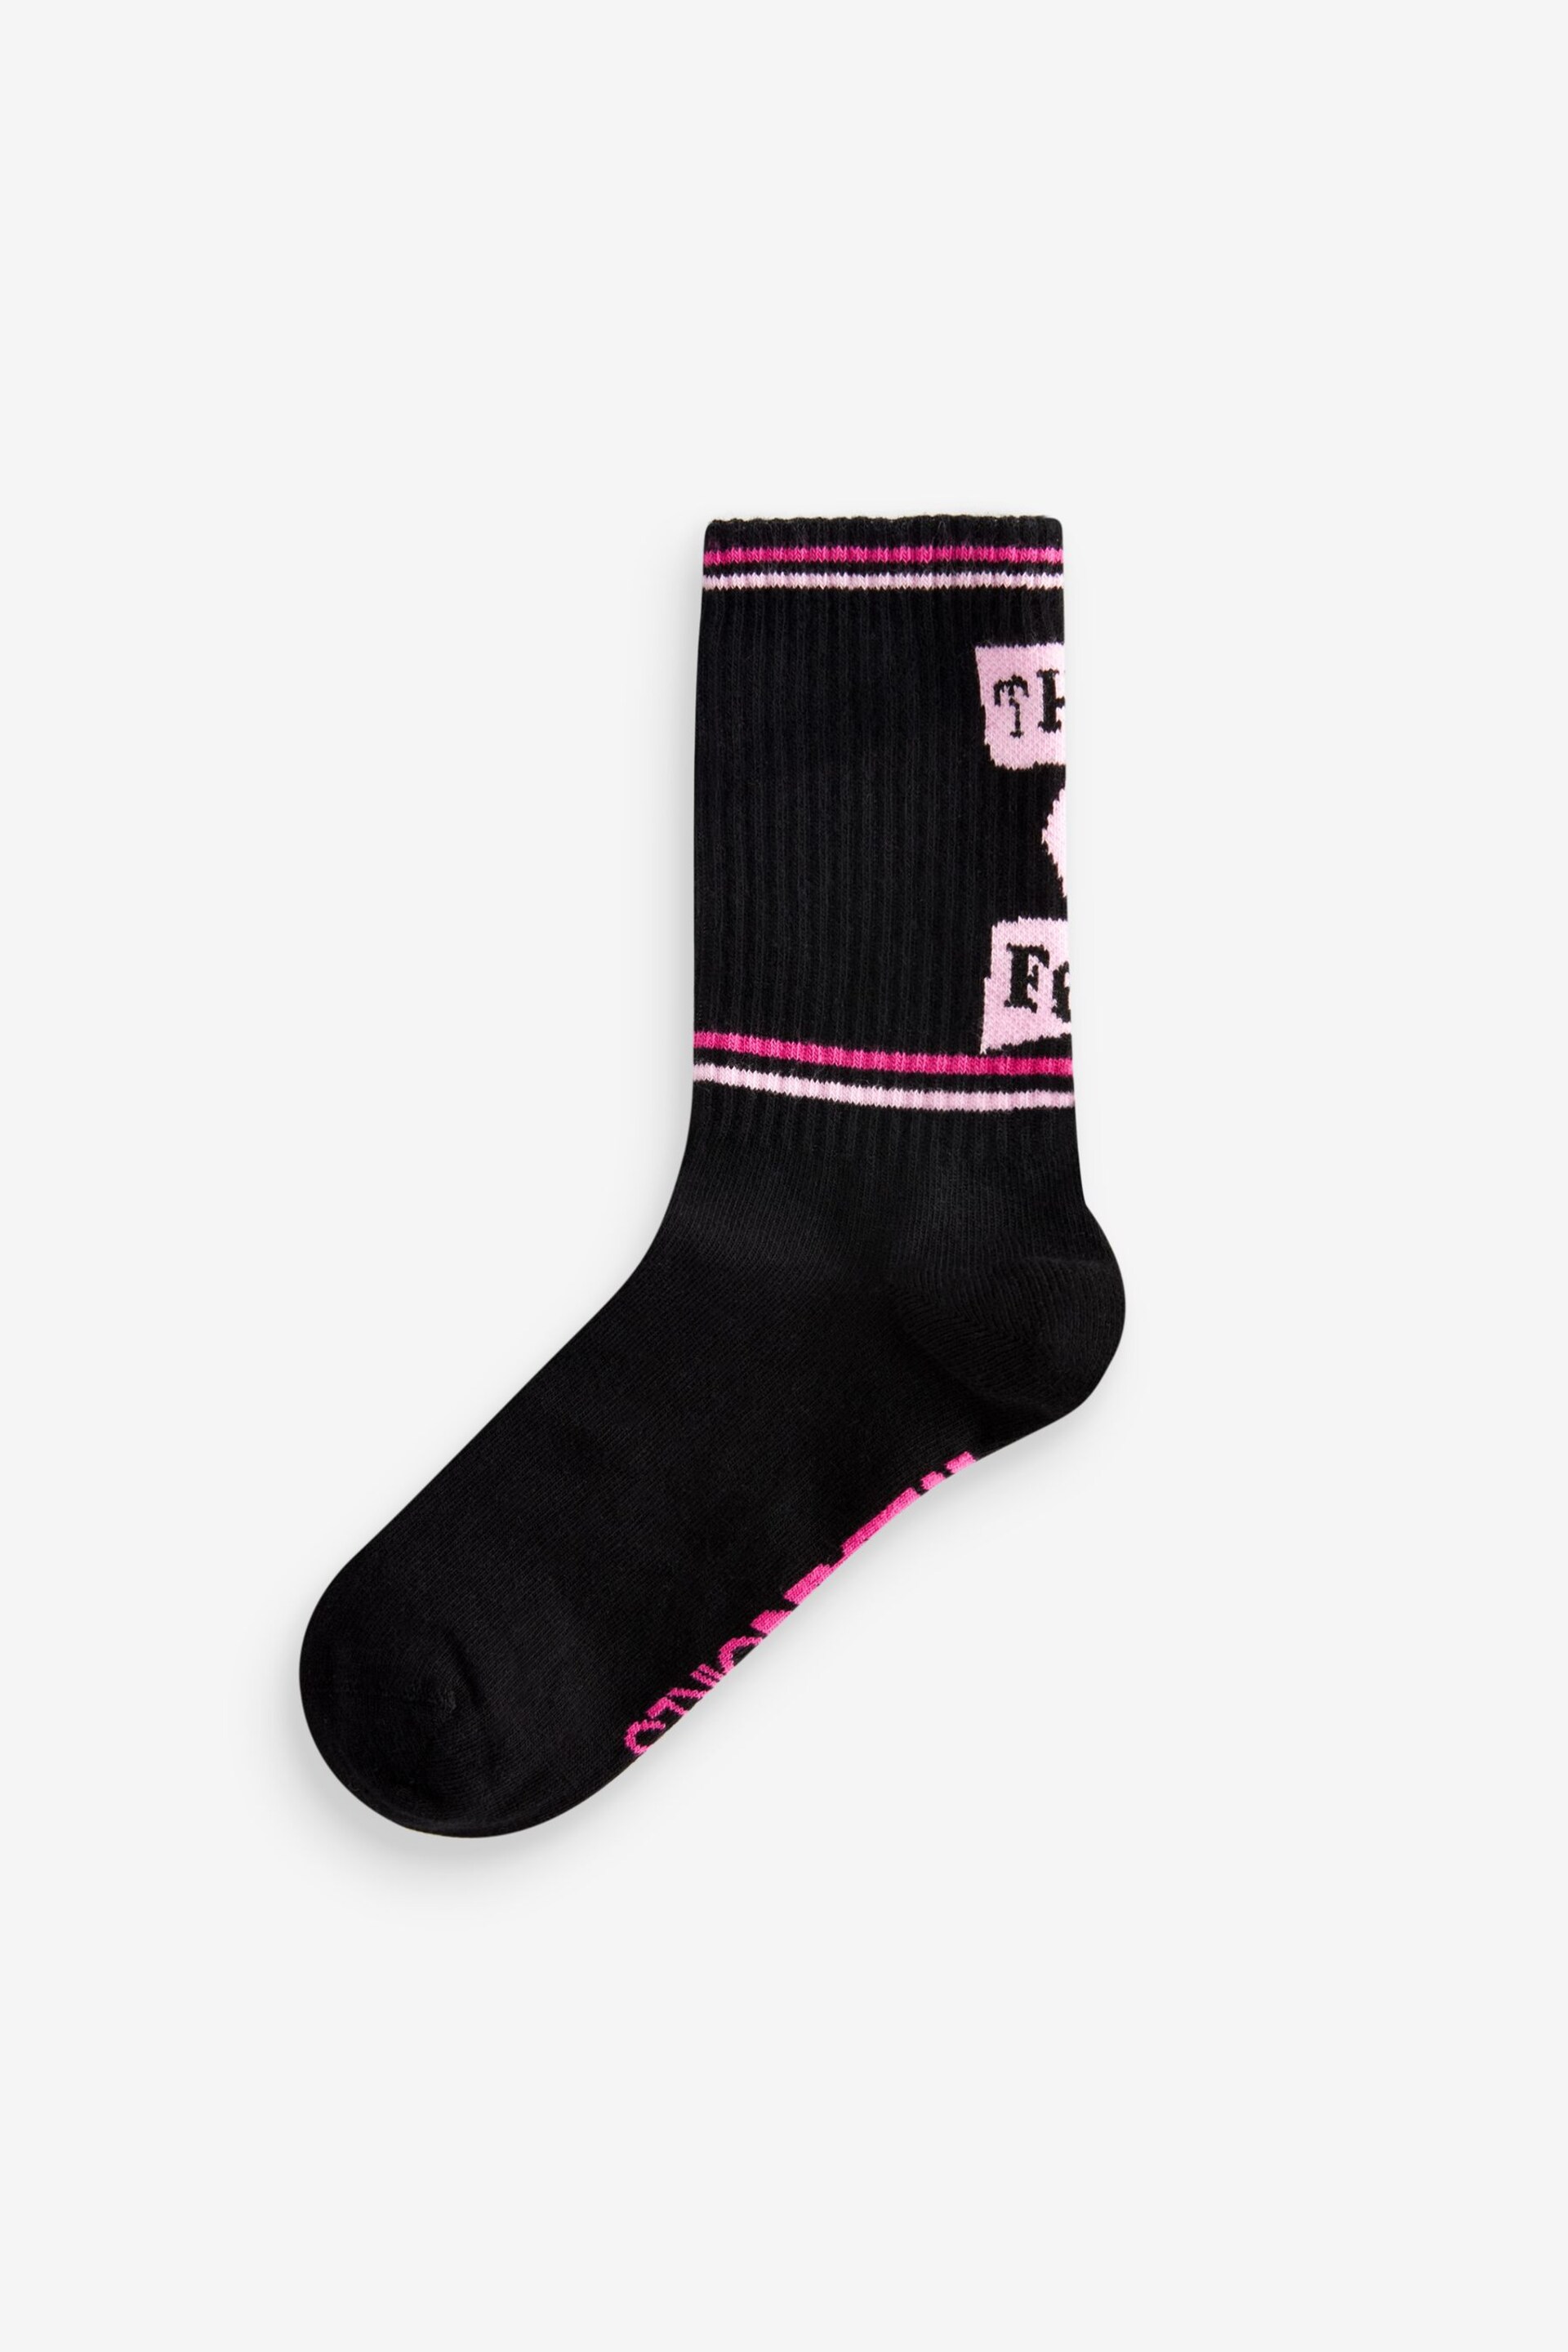 Pink/Black Mean Girls Ankle Socks 3 Pack - Image 4 of 5